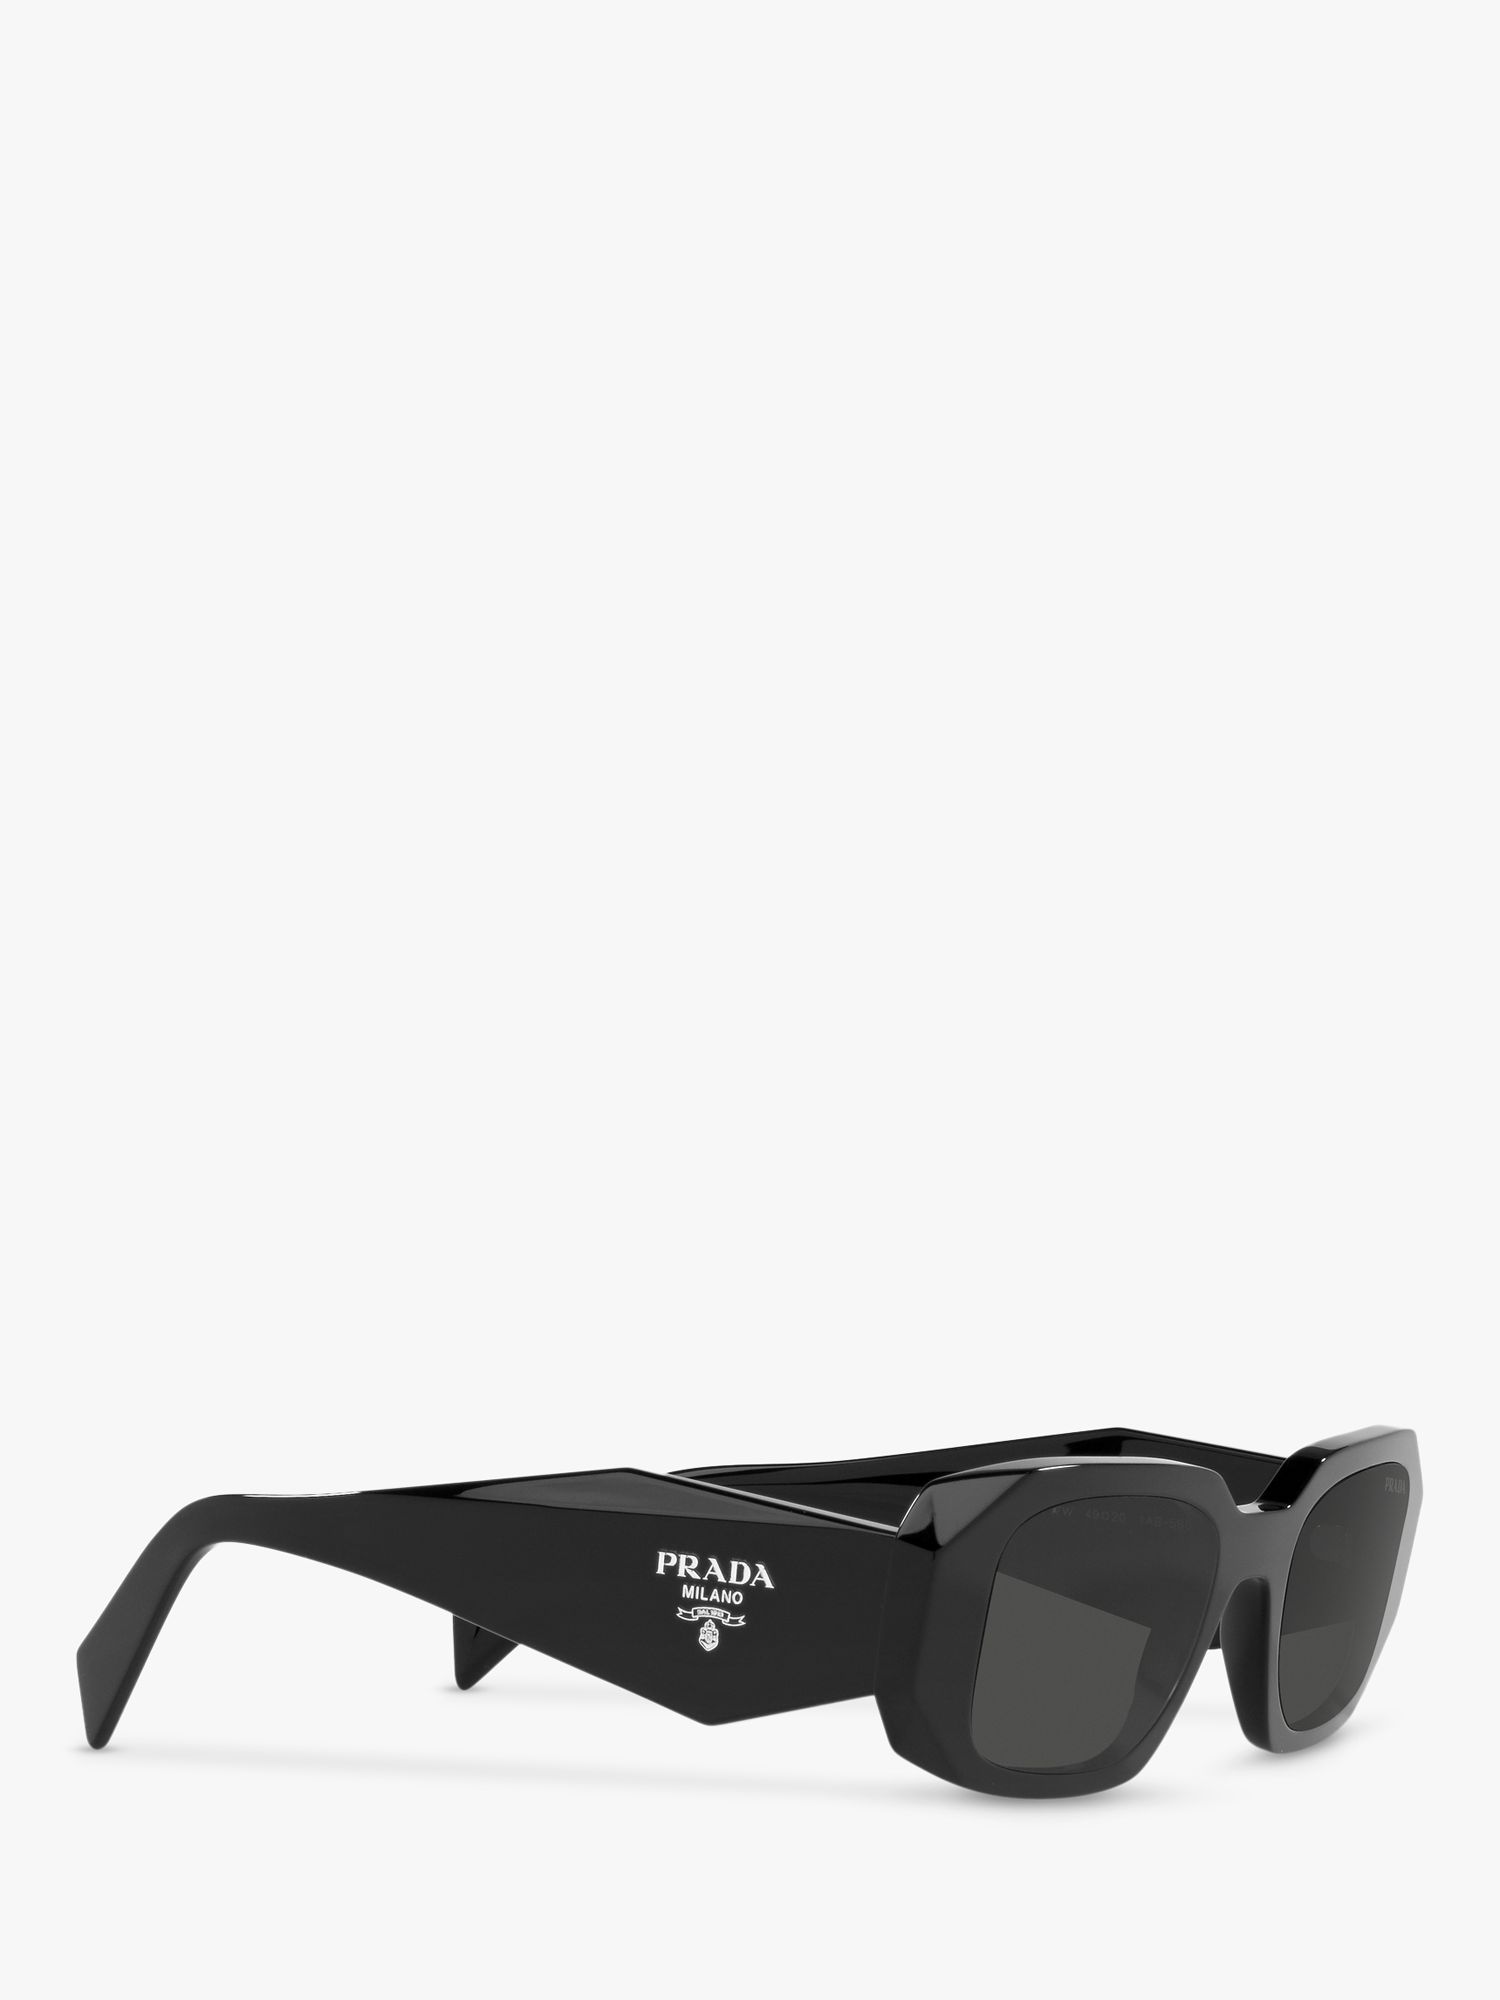 Prada Runway Sunglasses 